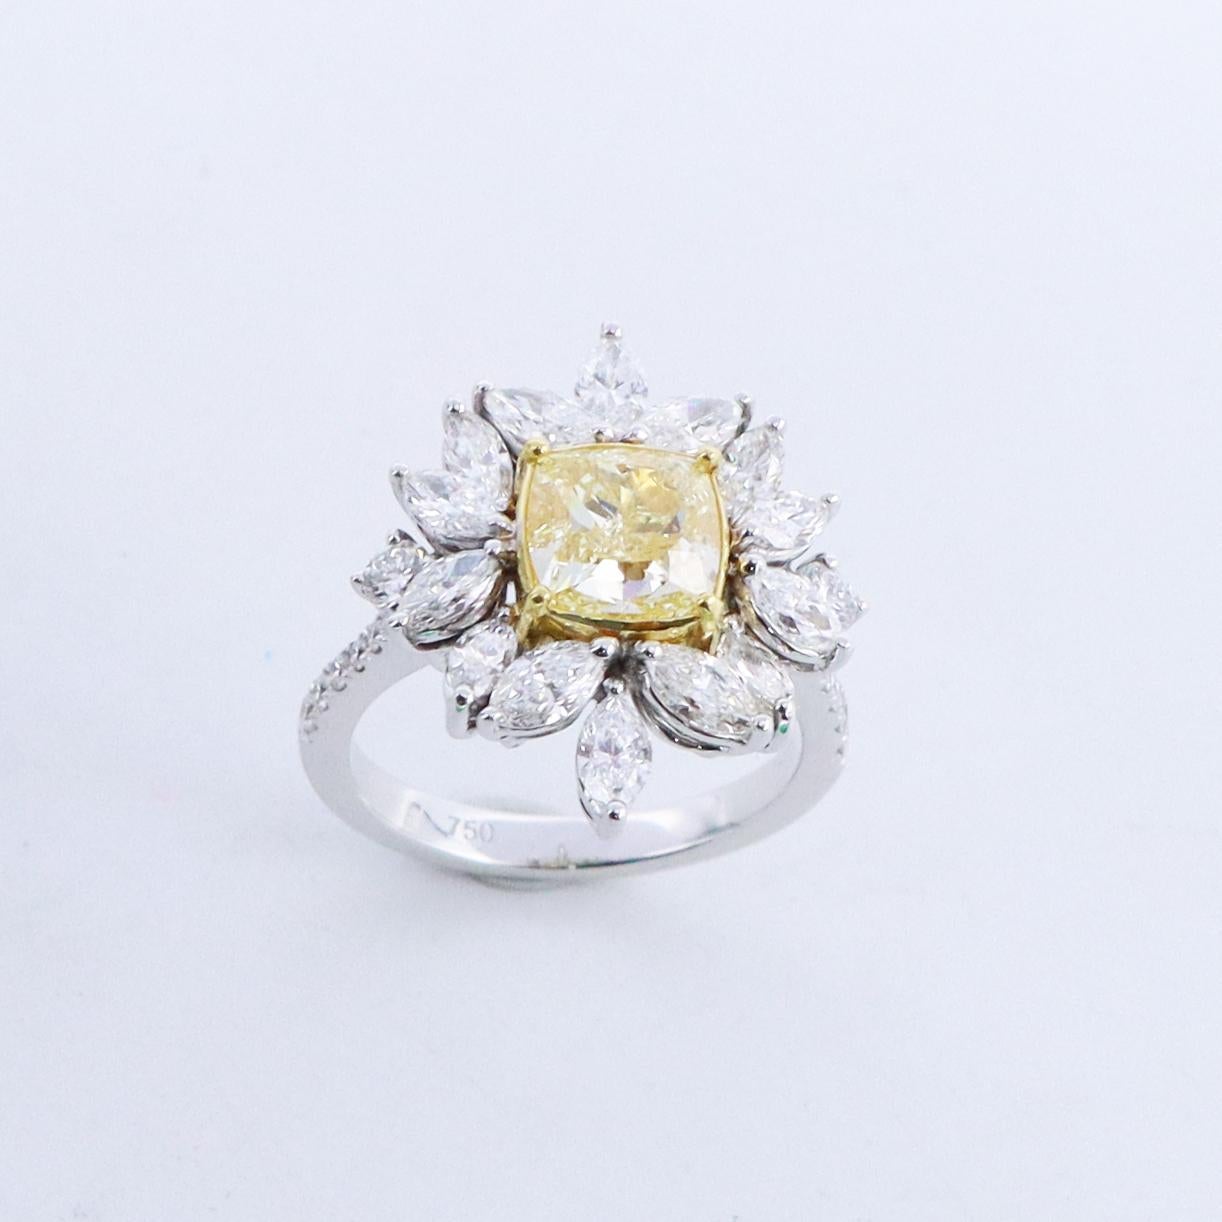 Cushion Cut Emilio Jewelry 3.82 Carat Fancy Yellow Diamond Cluster Cocktail Ring